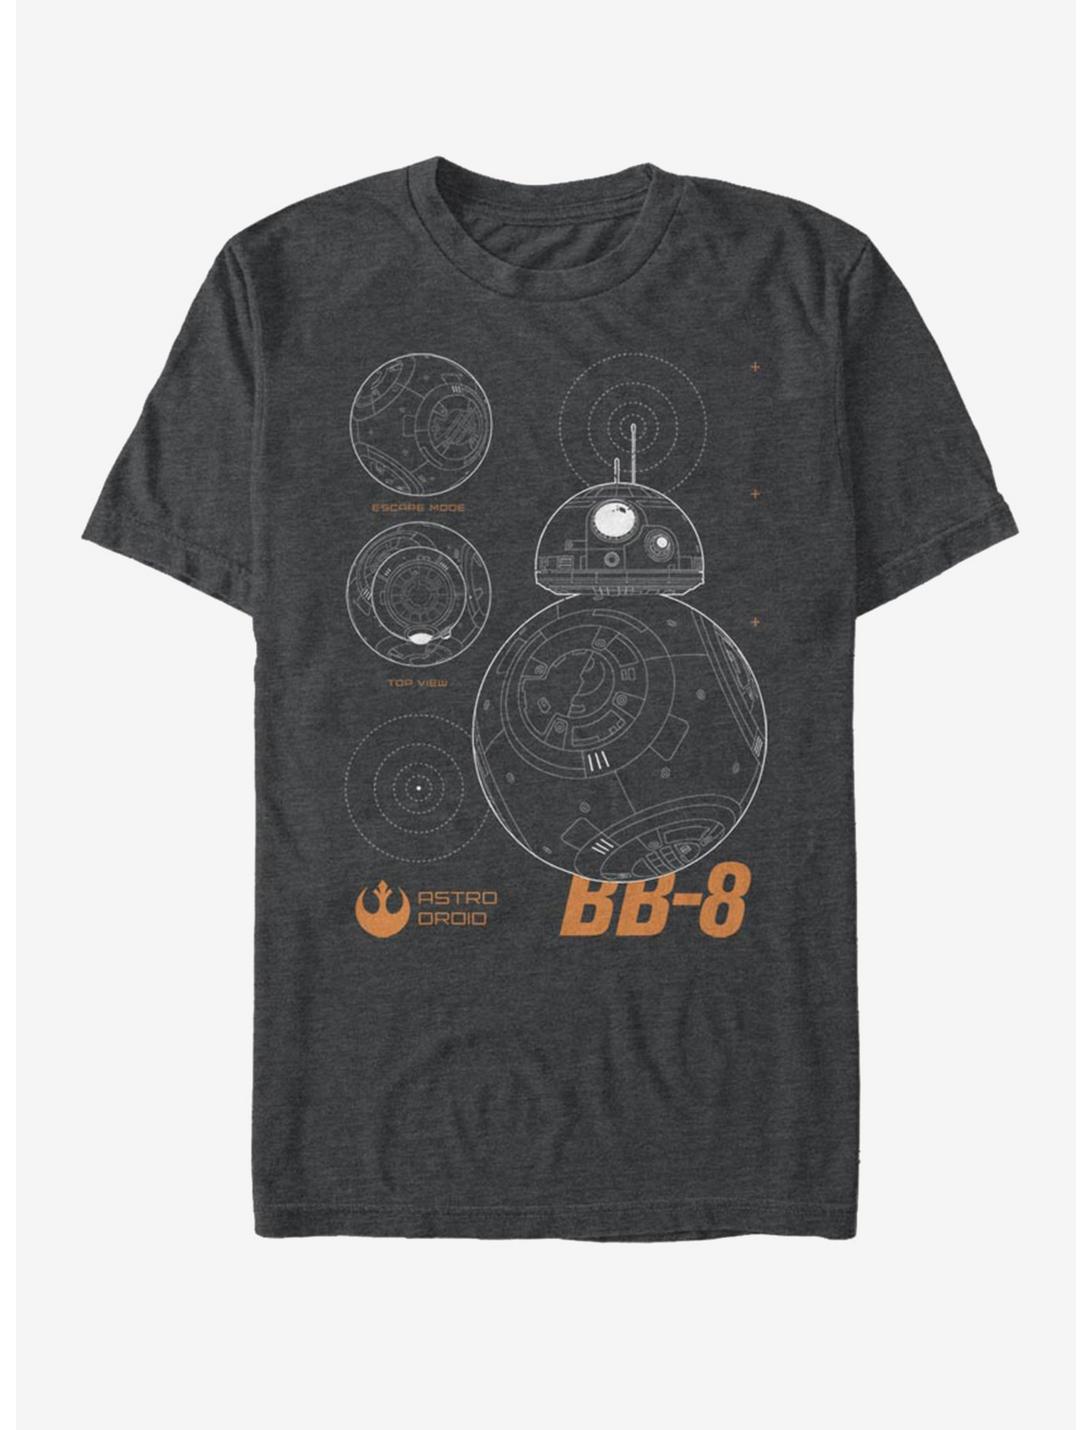 Star Wars BeeBee T-Shirt, , hi-res